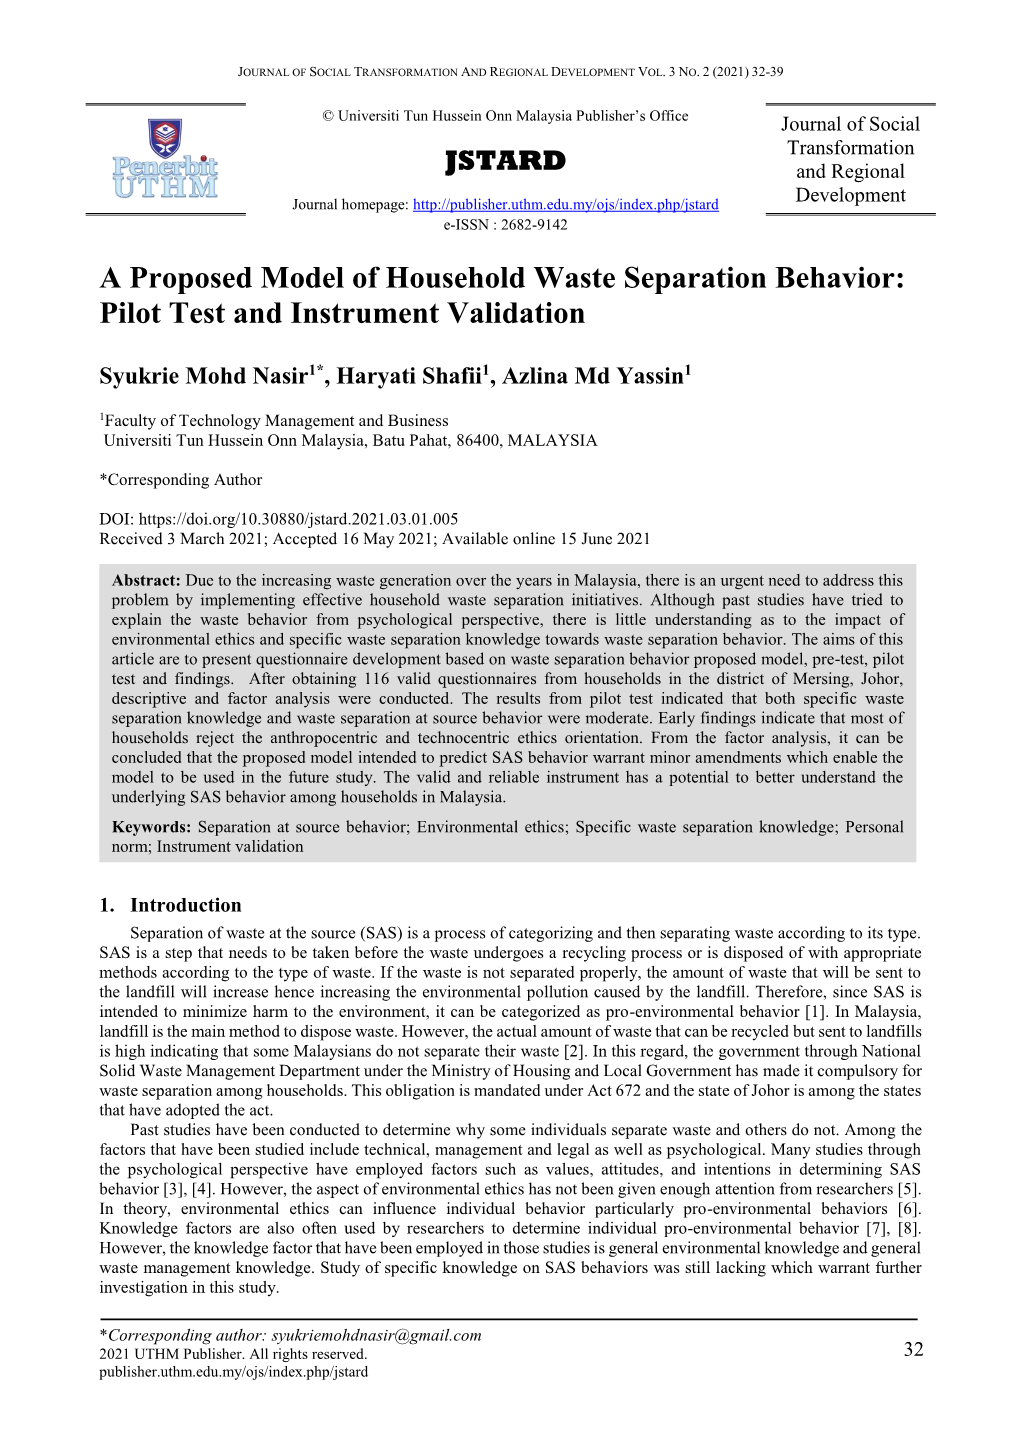 A Proposed Model of Household Waste Separation Behavior: Pilot Test and Instrument Validation